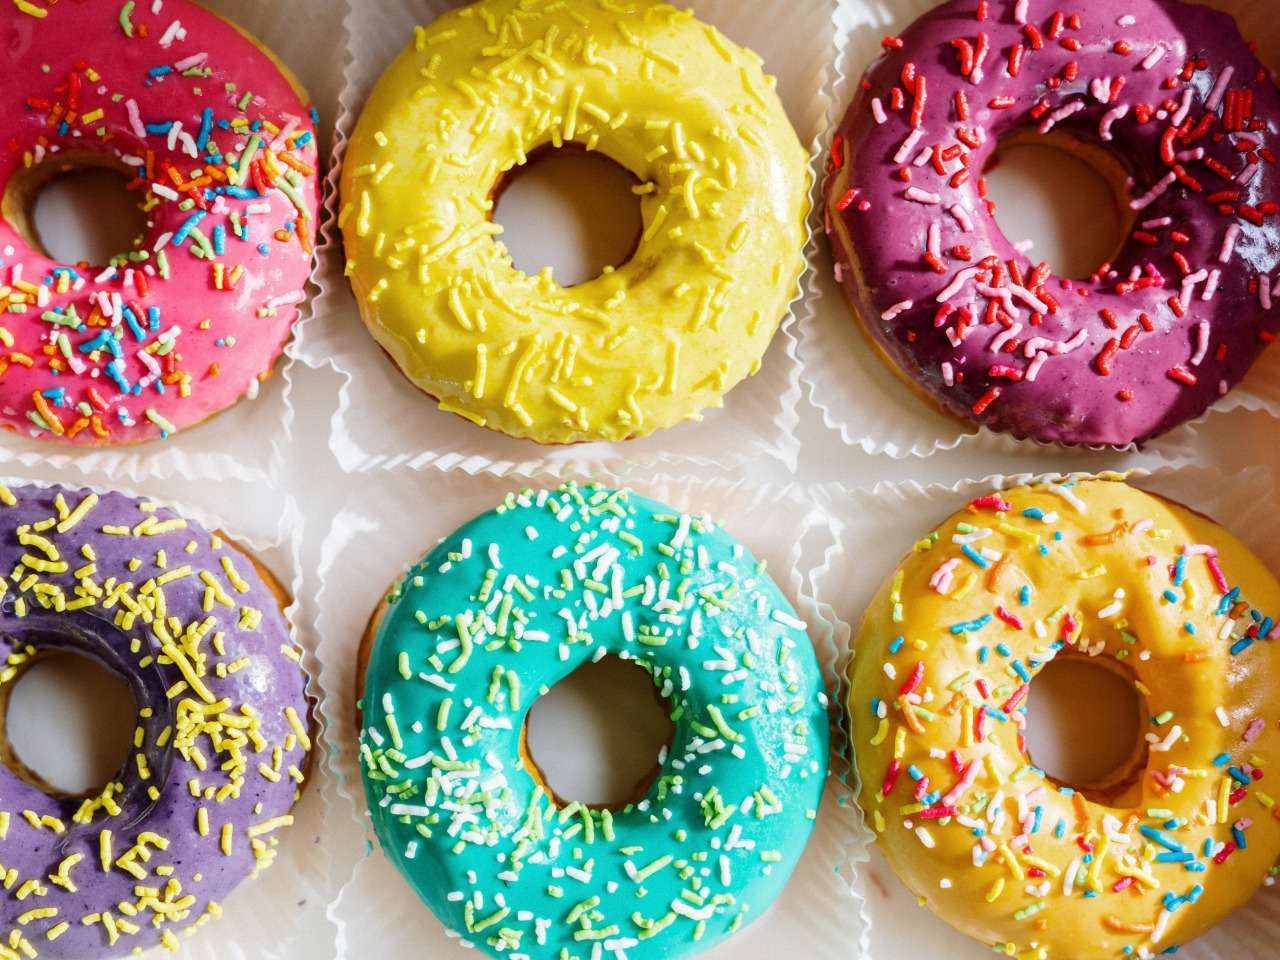 Pyszne pączki -Delicious donuts, mniam puzzle online